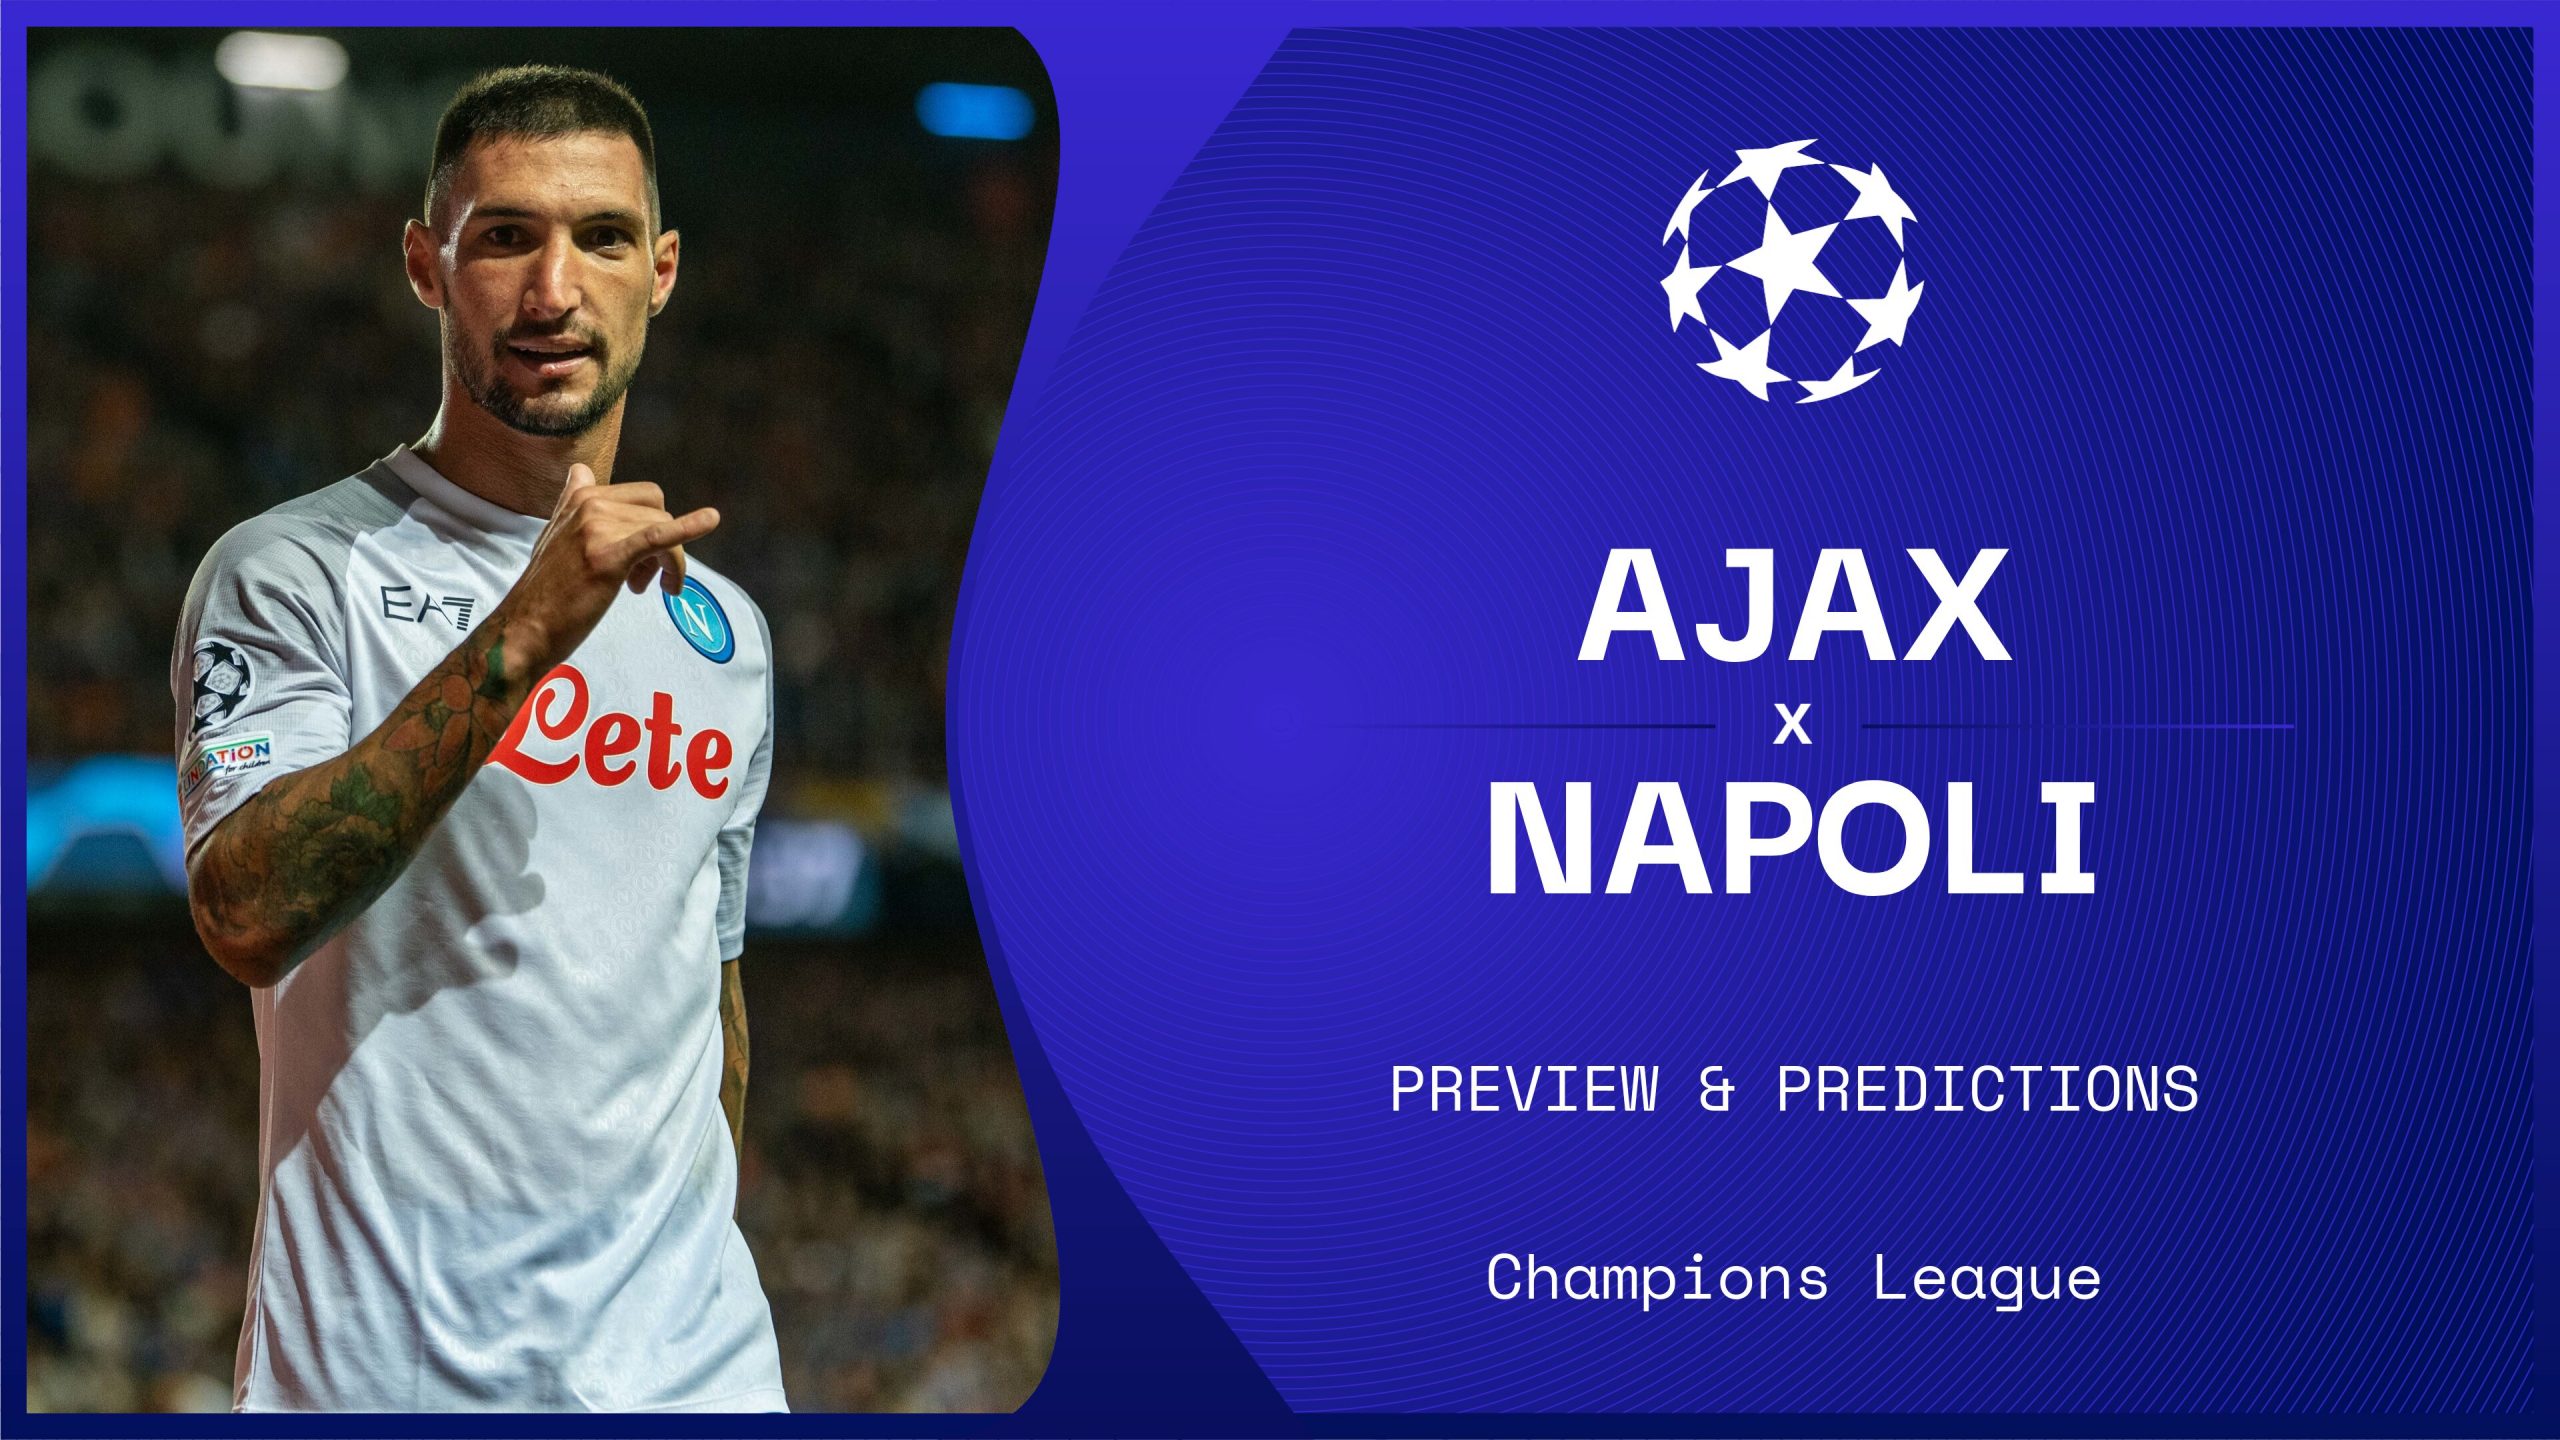 Video Clip Highlights: Ajax vs Napoli – C1 CHÂU ÂU